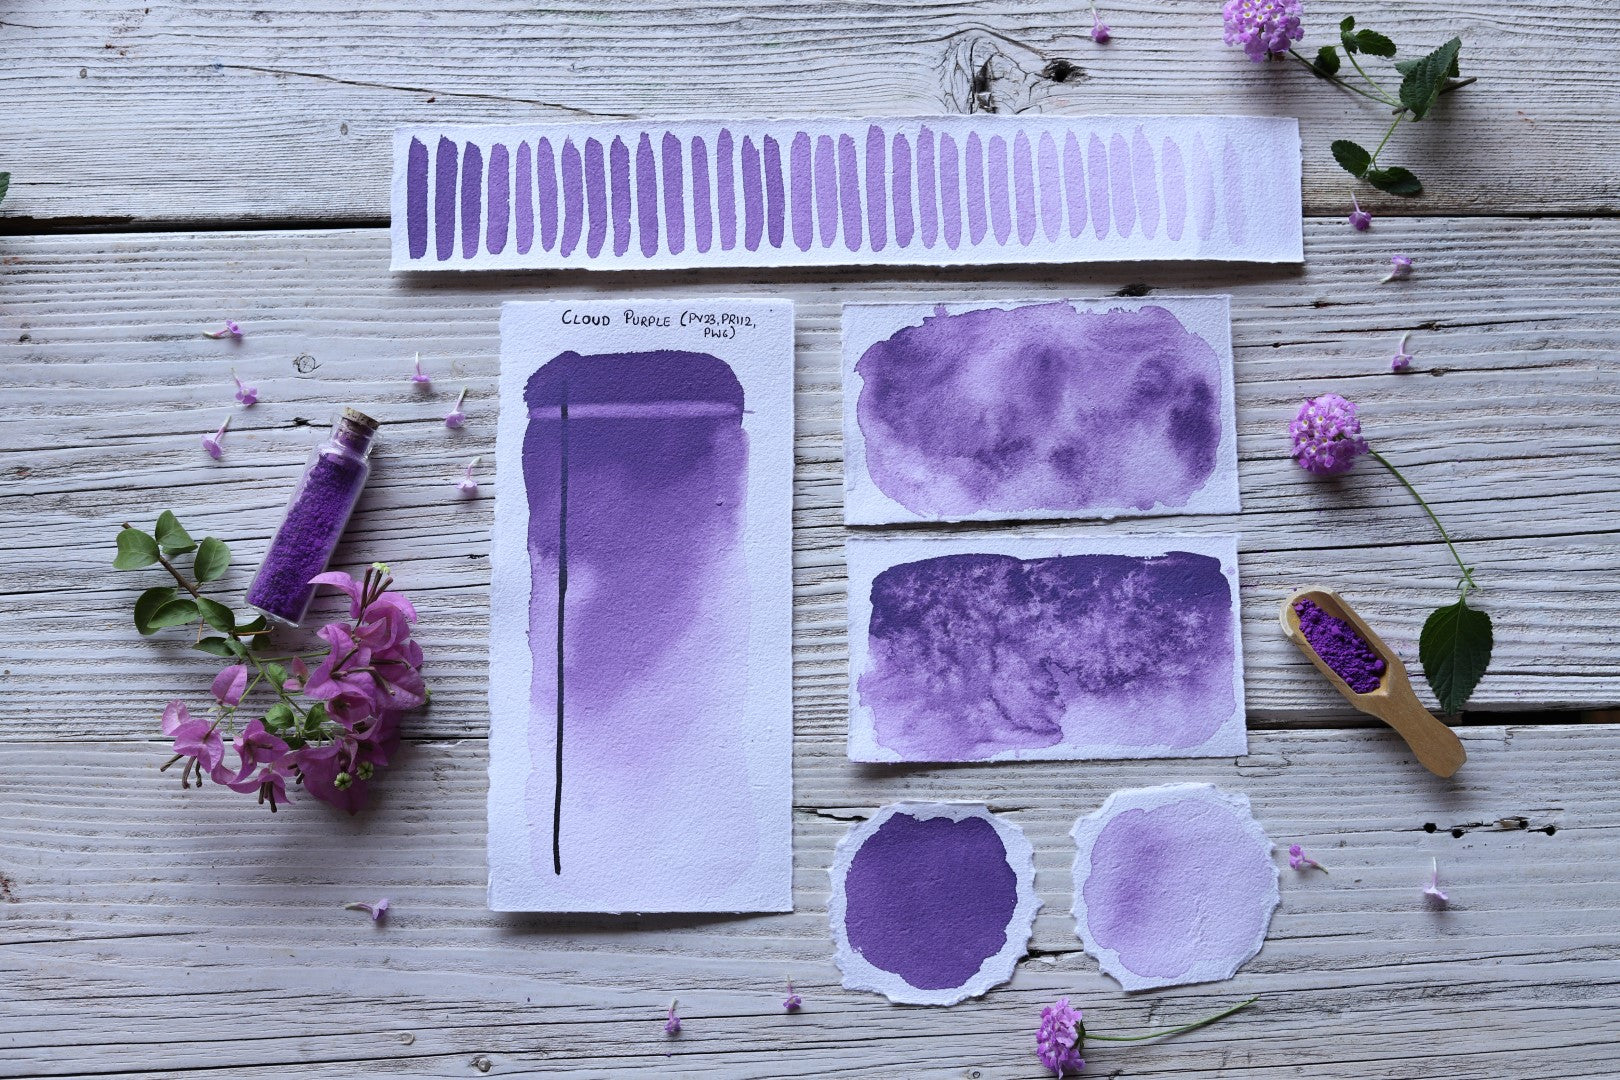 blue-pine-arts-premium-art-supplies-handmade-artisanal-watercolor-paints-professional-watercolors-handcrafted-cloud-purple-5982.jpg